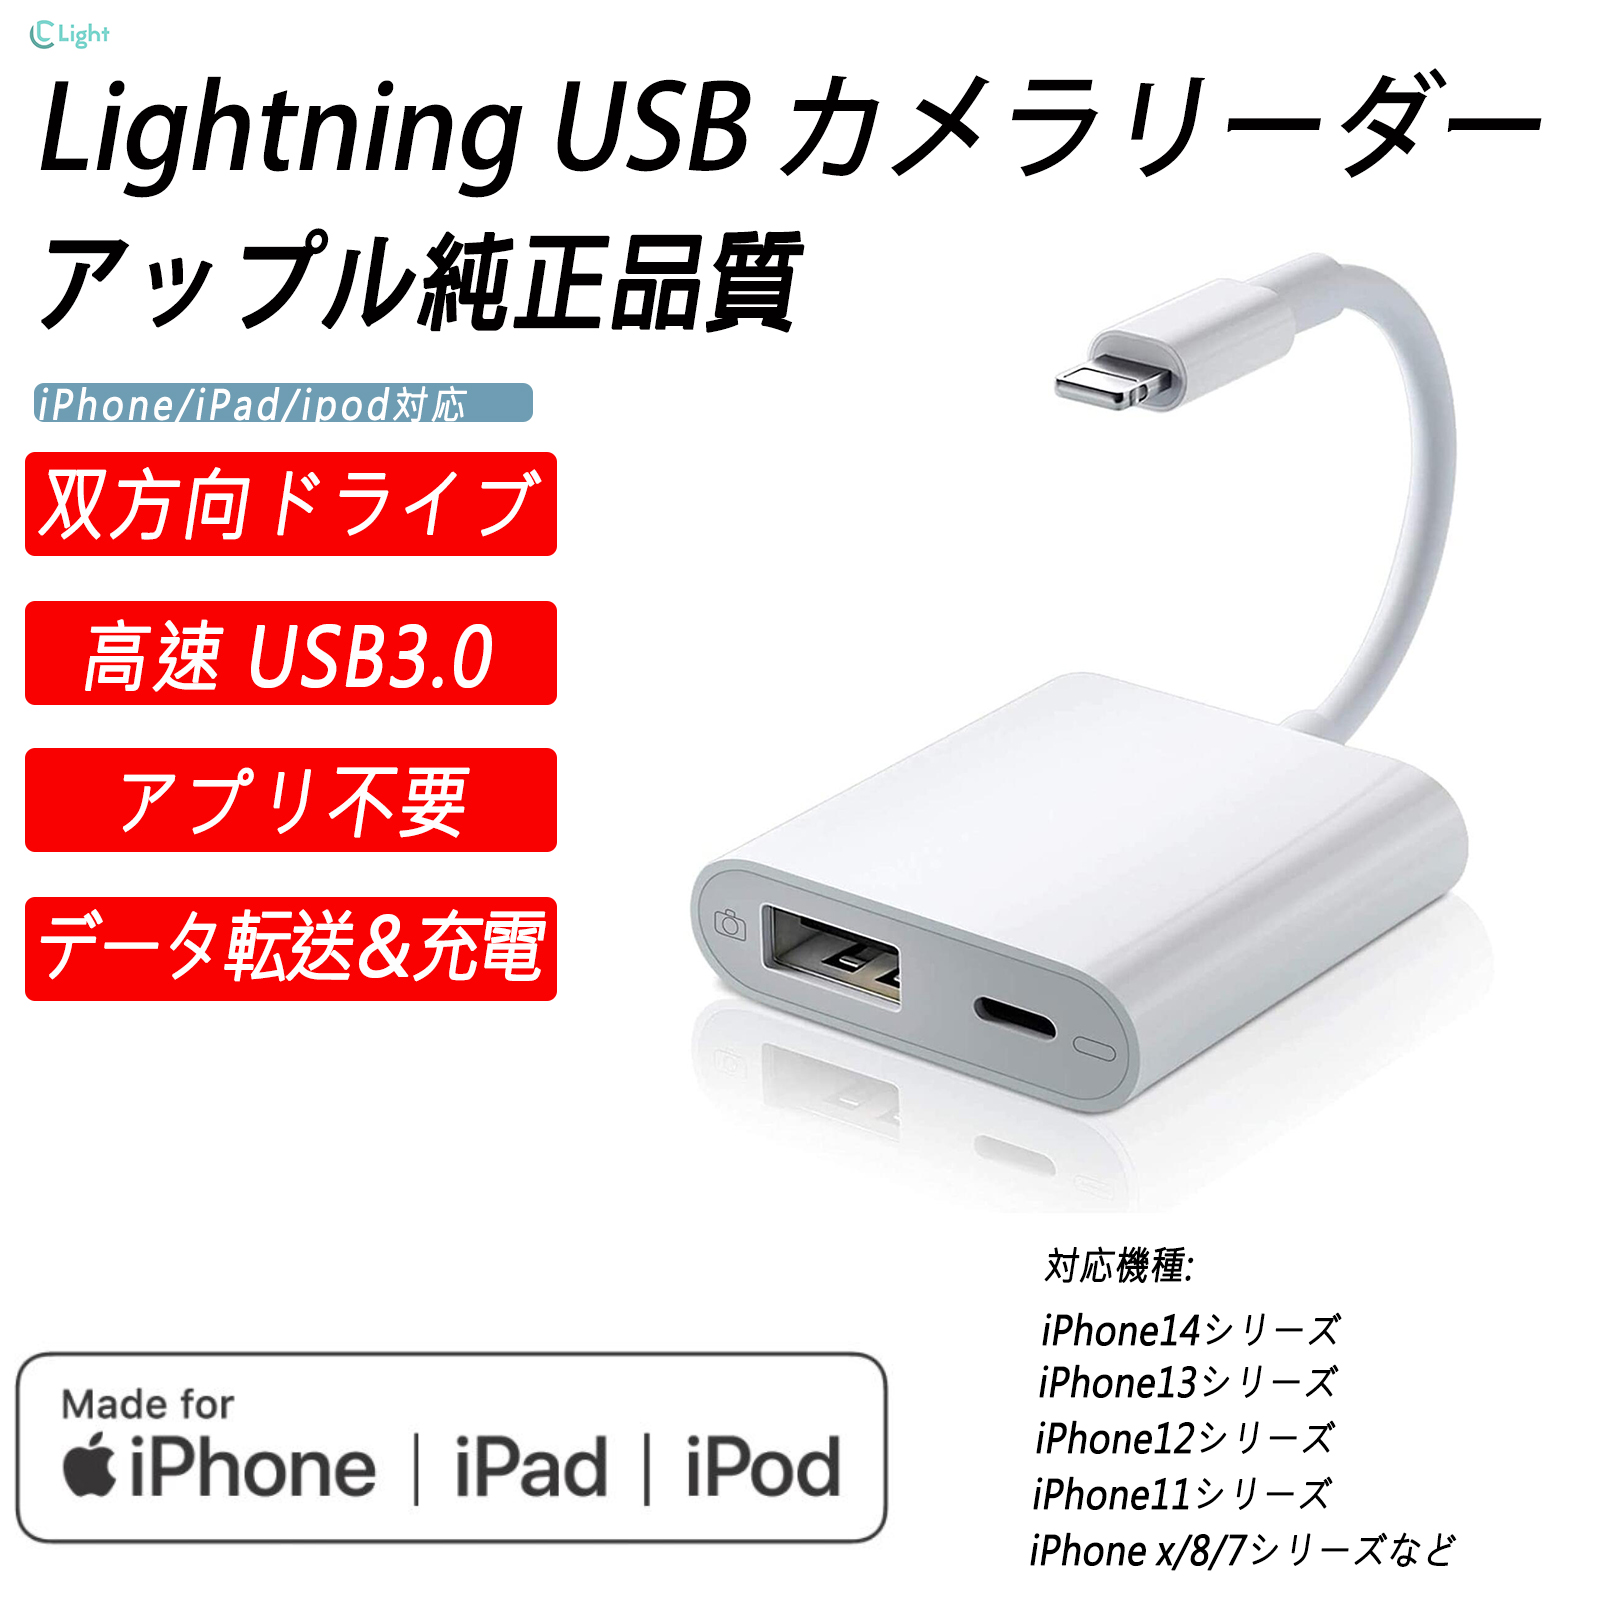 iPhone ipad Lightning USB 3 camera Leader camera conversion lightning adaptor USB3.0 device correspondence photograph Leader data transfer 